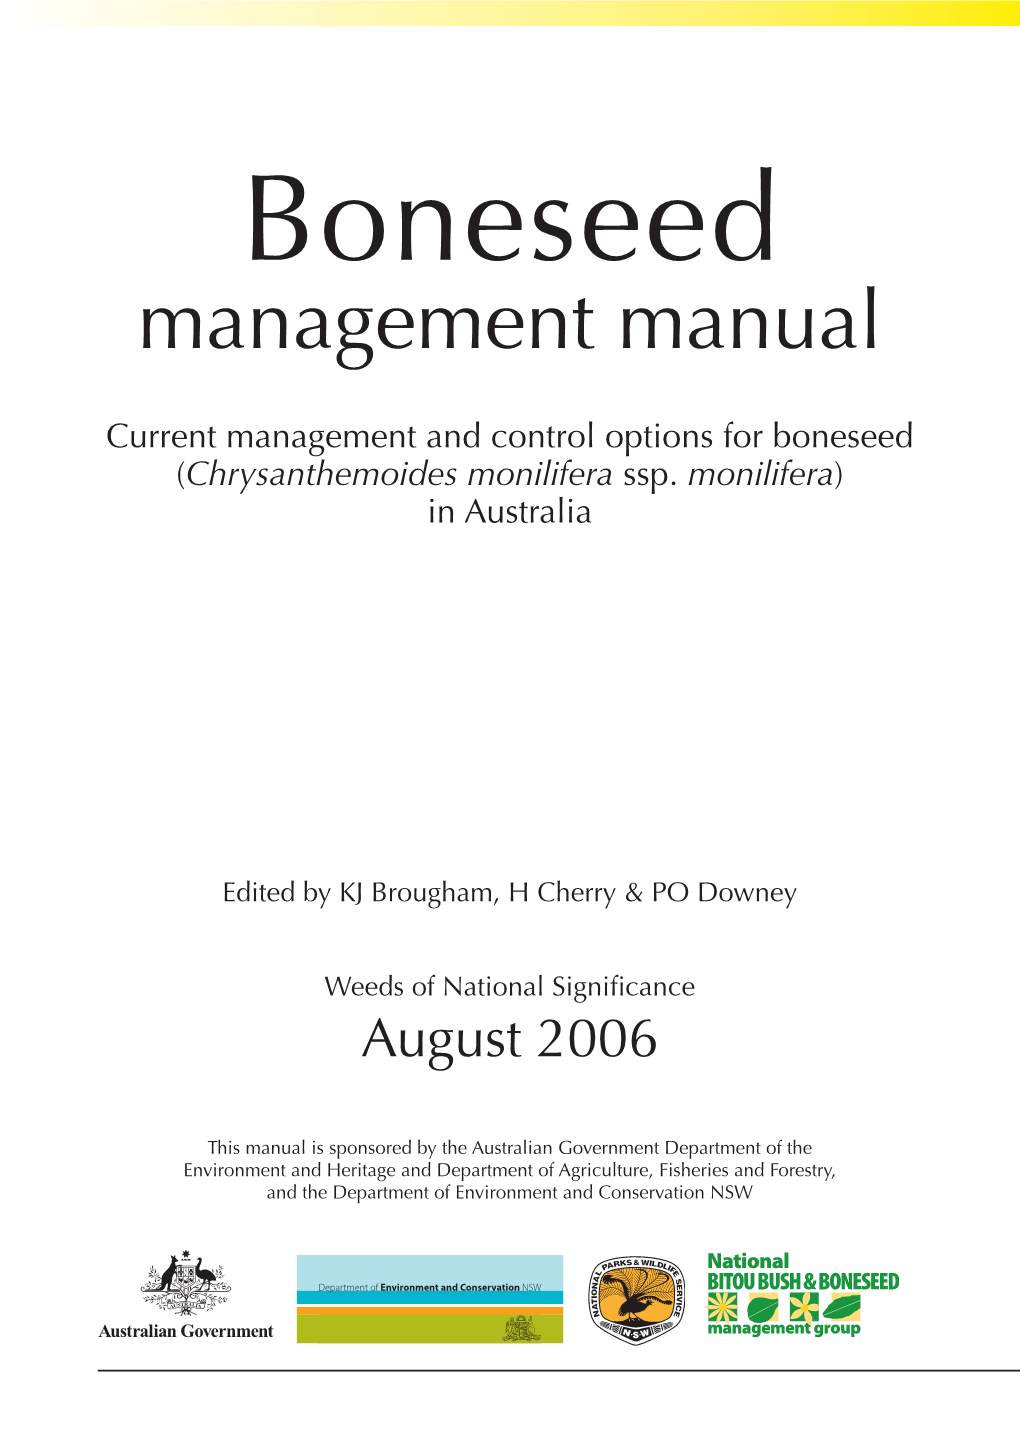 Boneseed Management Manual